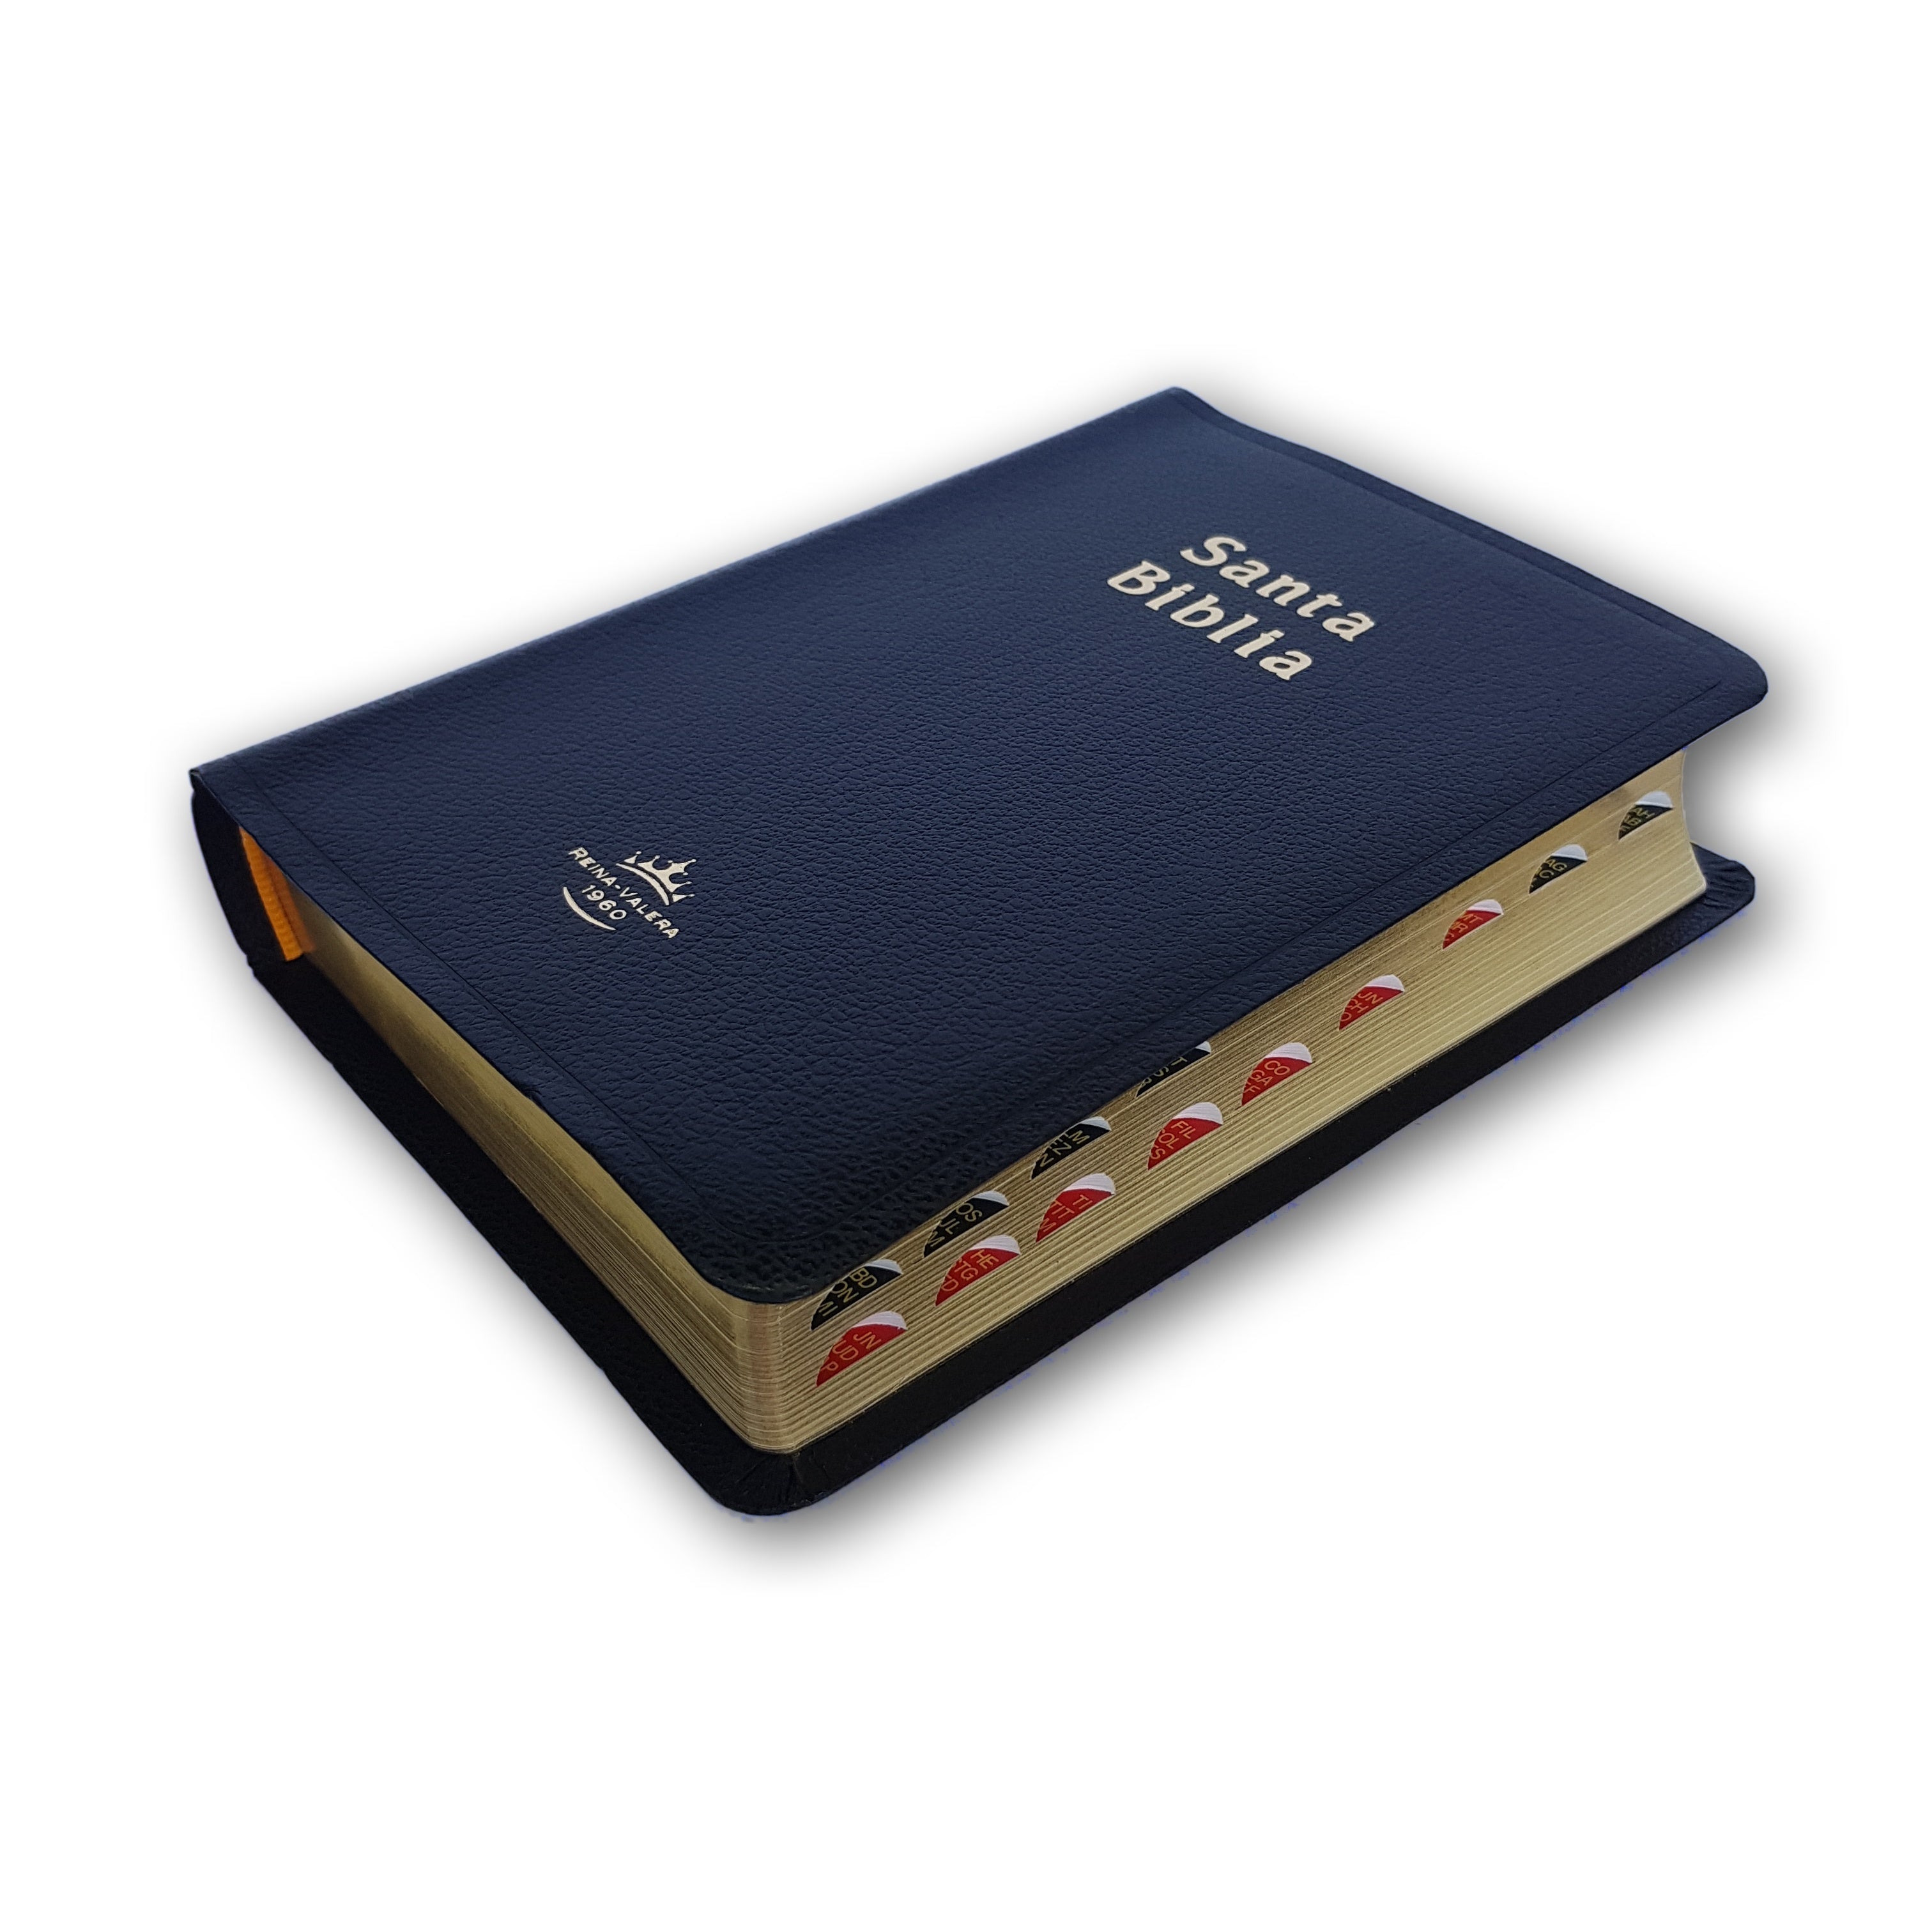 Santa Biblia RVR1960 Compacta imita. Piel negra c/índice